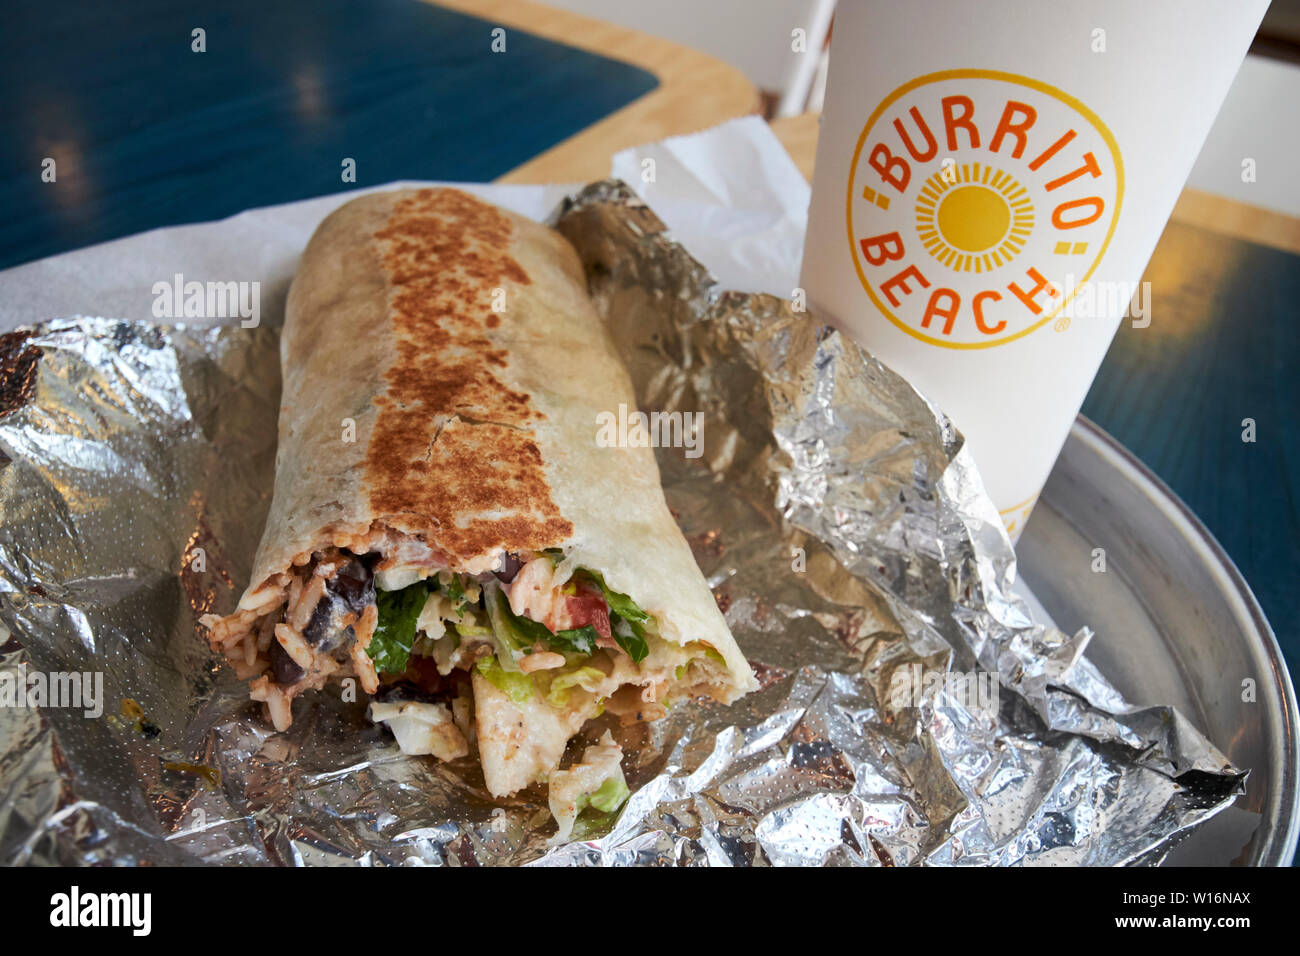 Burrito Strand burrito in Silber Papier mit Trinken Mahlzeit Chicago IL USA Stockfoto